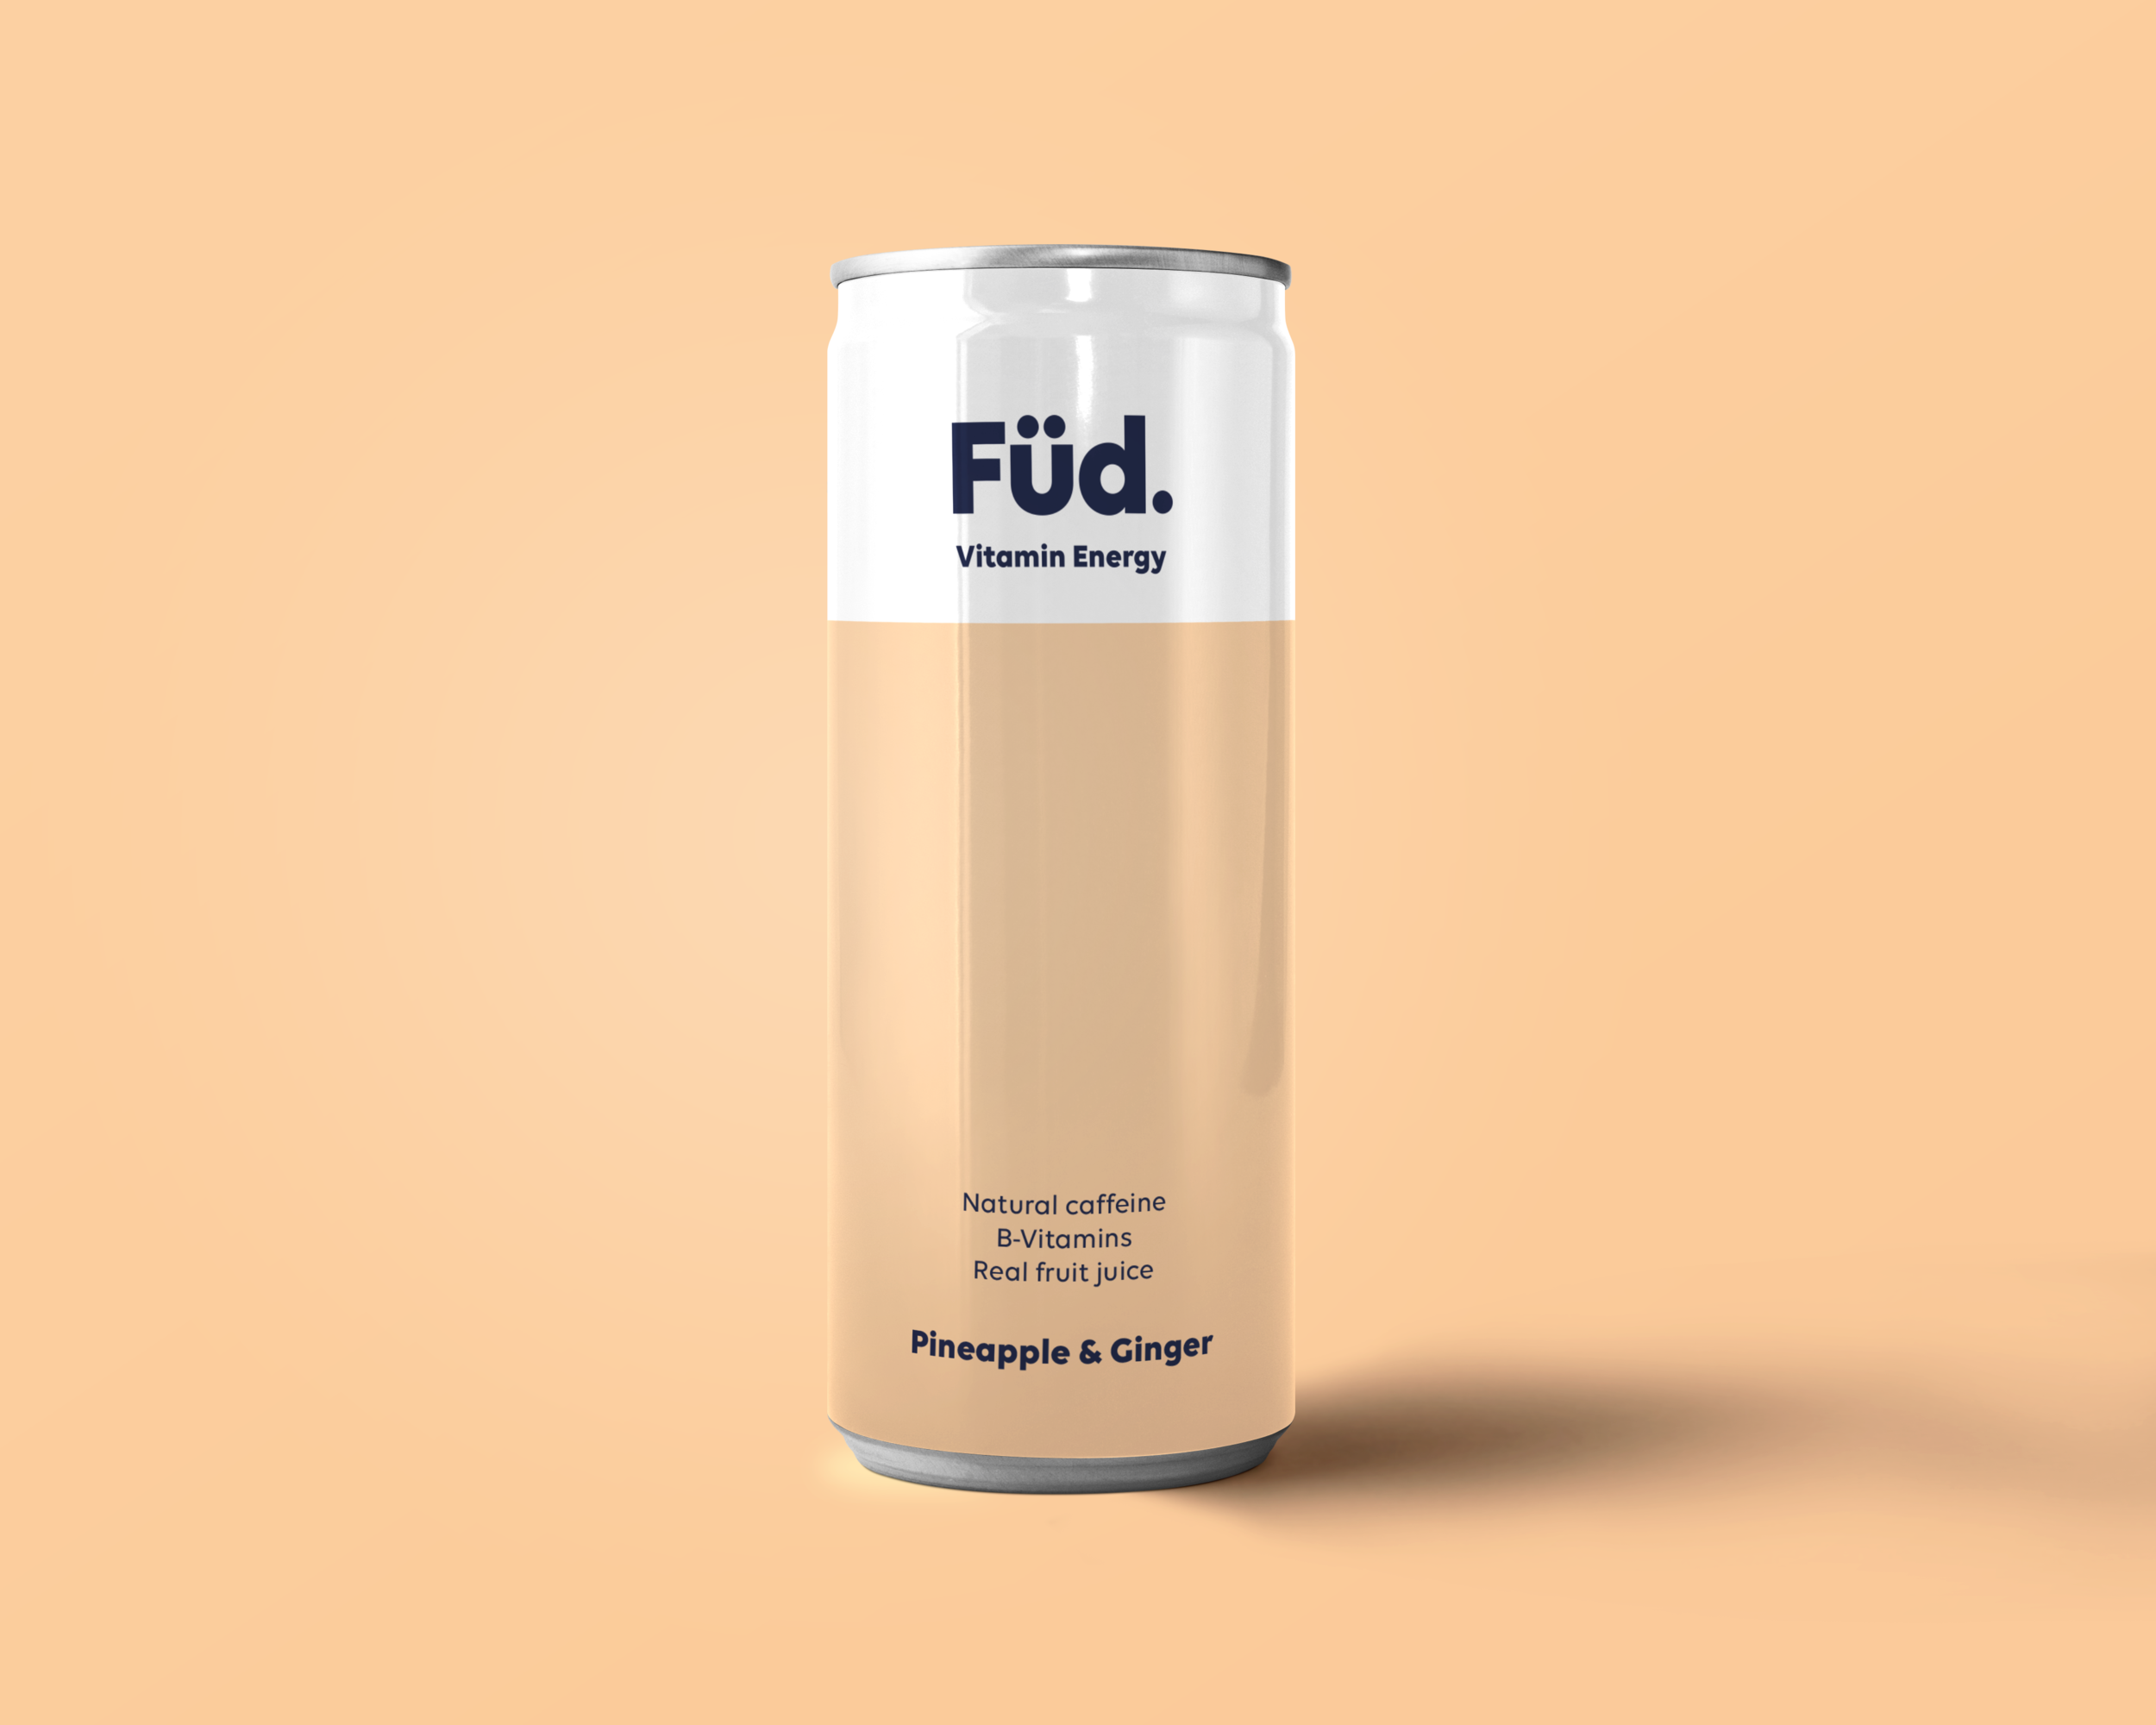  Food and beverage packaging designer UK. A beige can of Füd vitamin energy drink